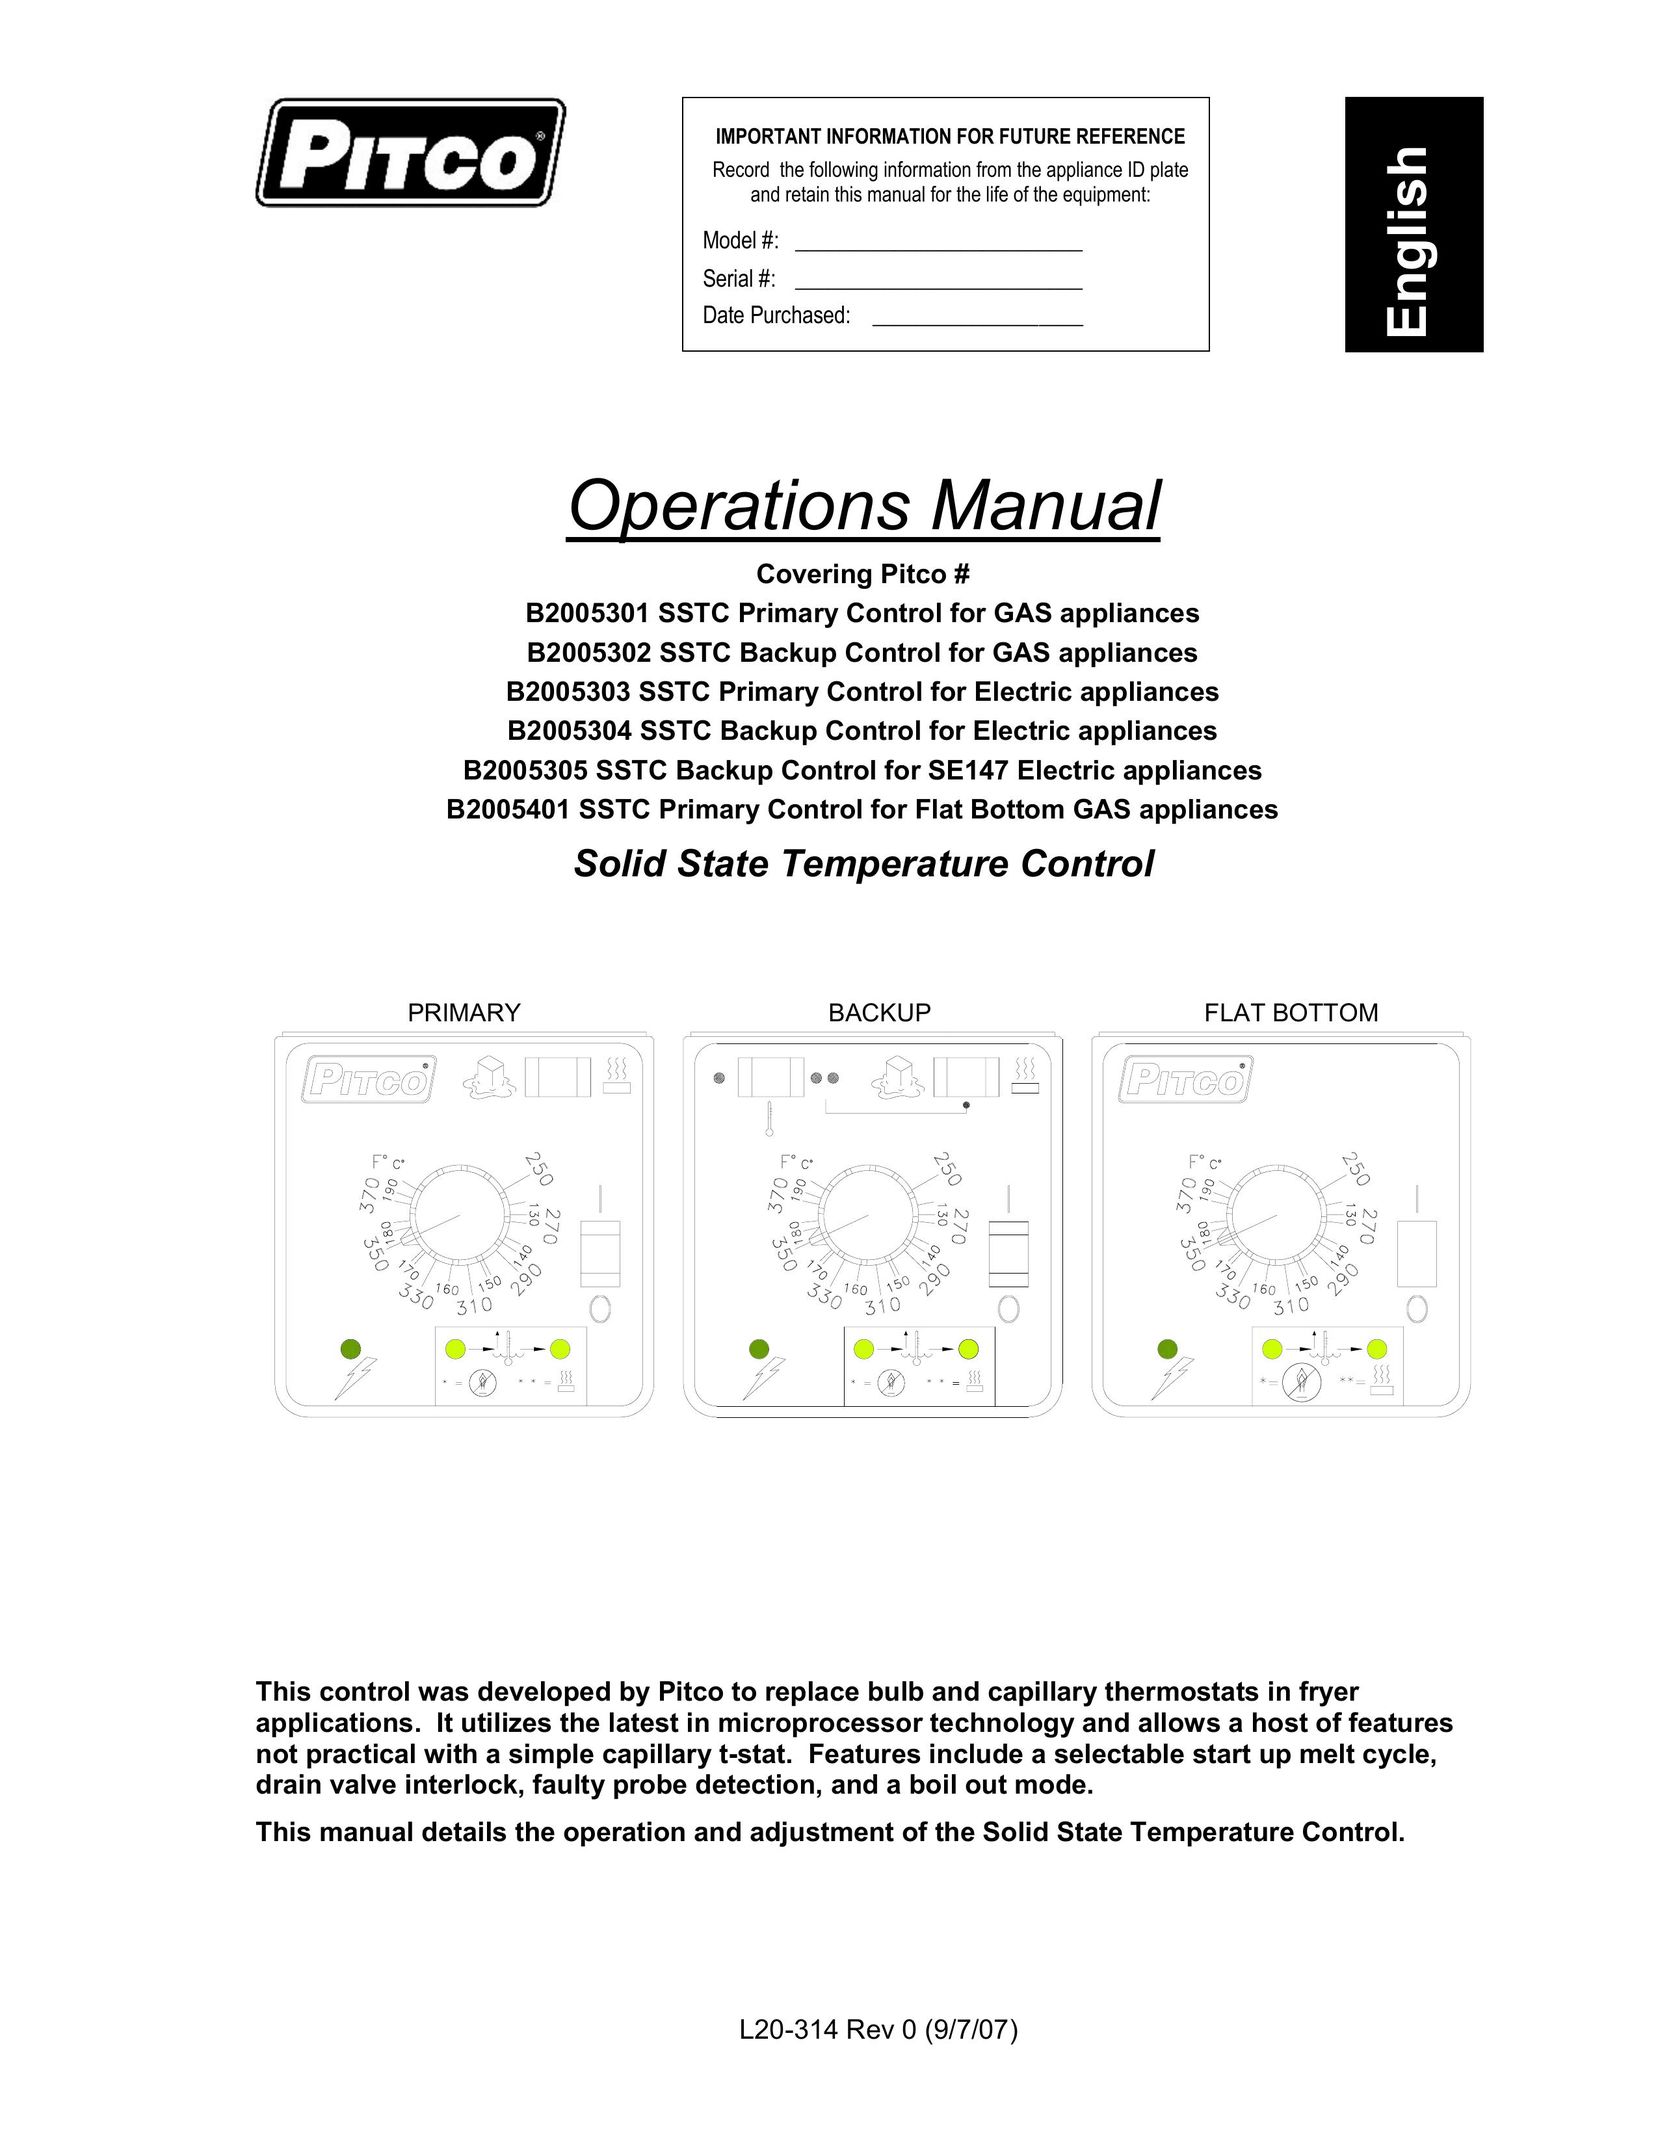 Pitco Frialator B2005304 SSTC Thermostat User Manual